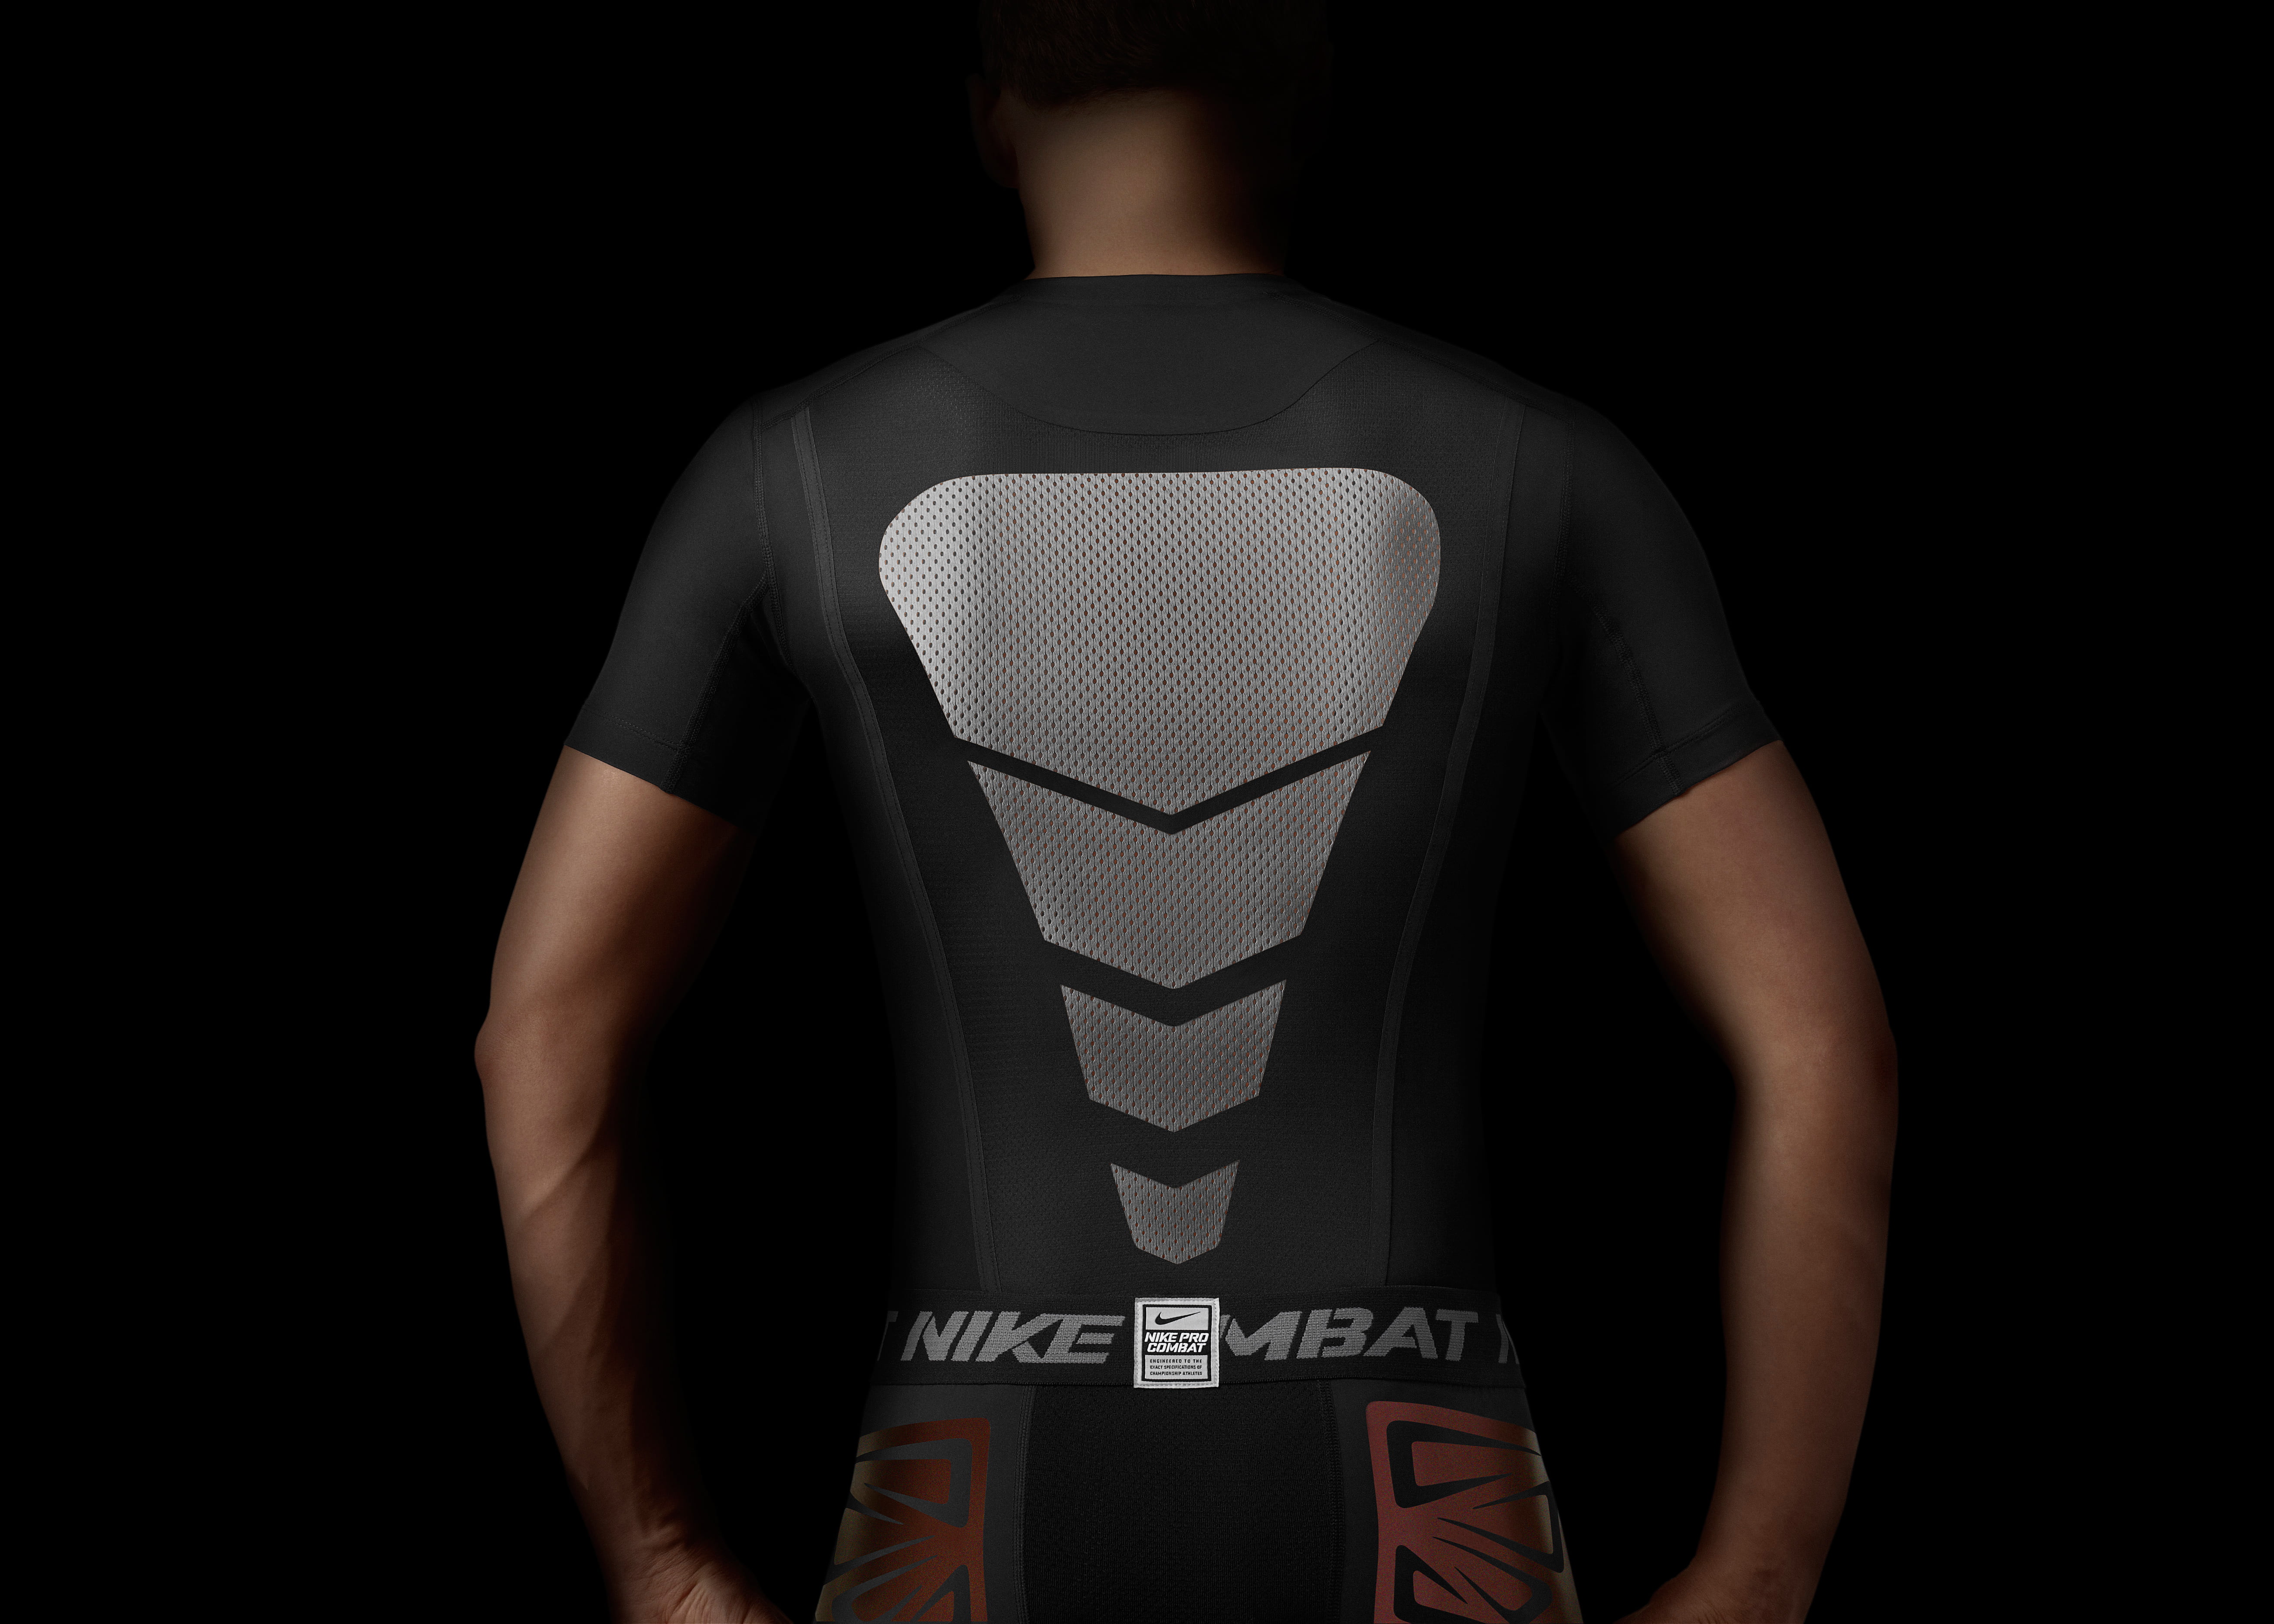 men's gray and black Nike Combat suit